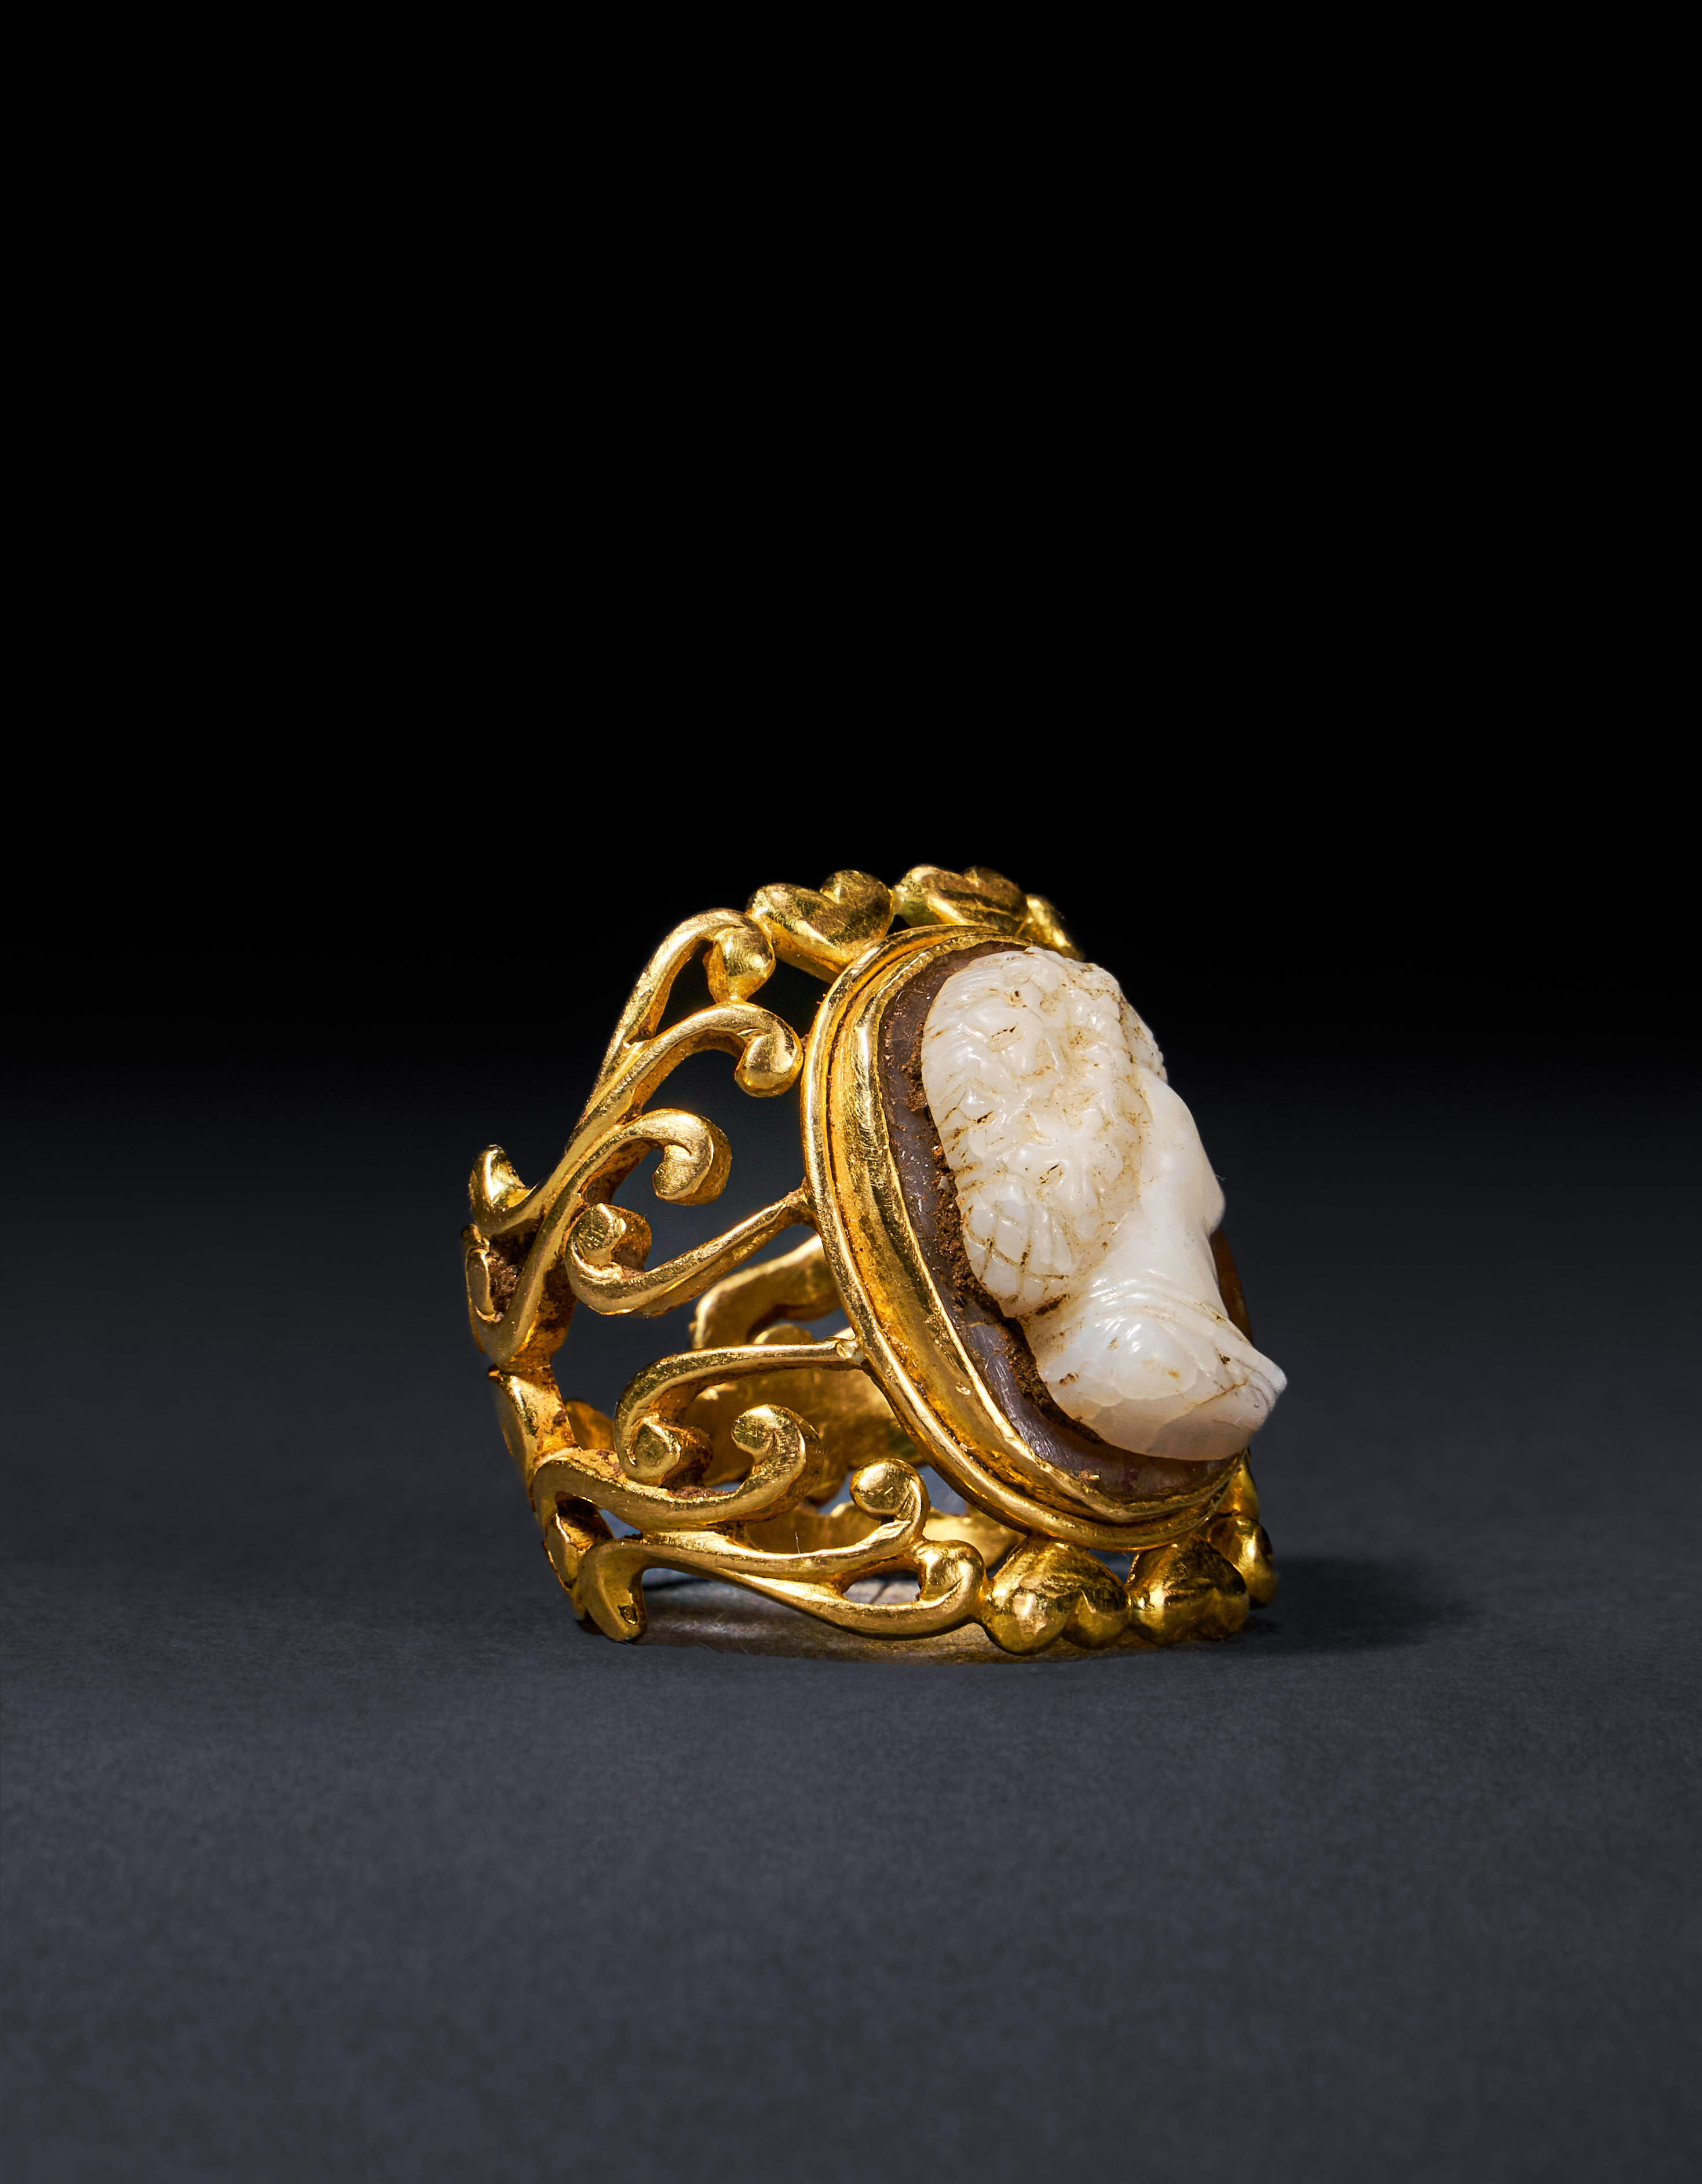 A GOLD ROMAN CAMEO RING OF A GODDESS, CIRCA 1ST CENTURY B.C.-1ST CENTURY A.D. - Image 2 of 3